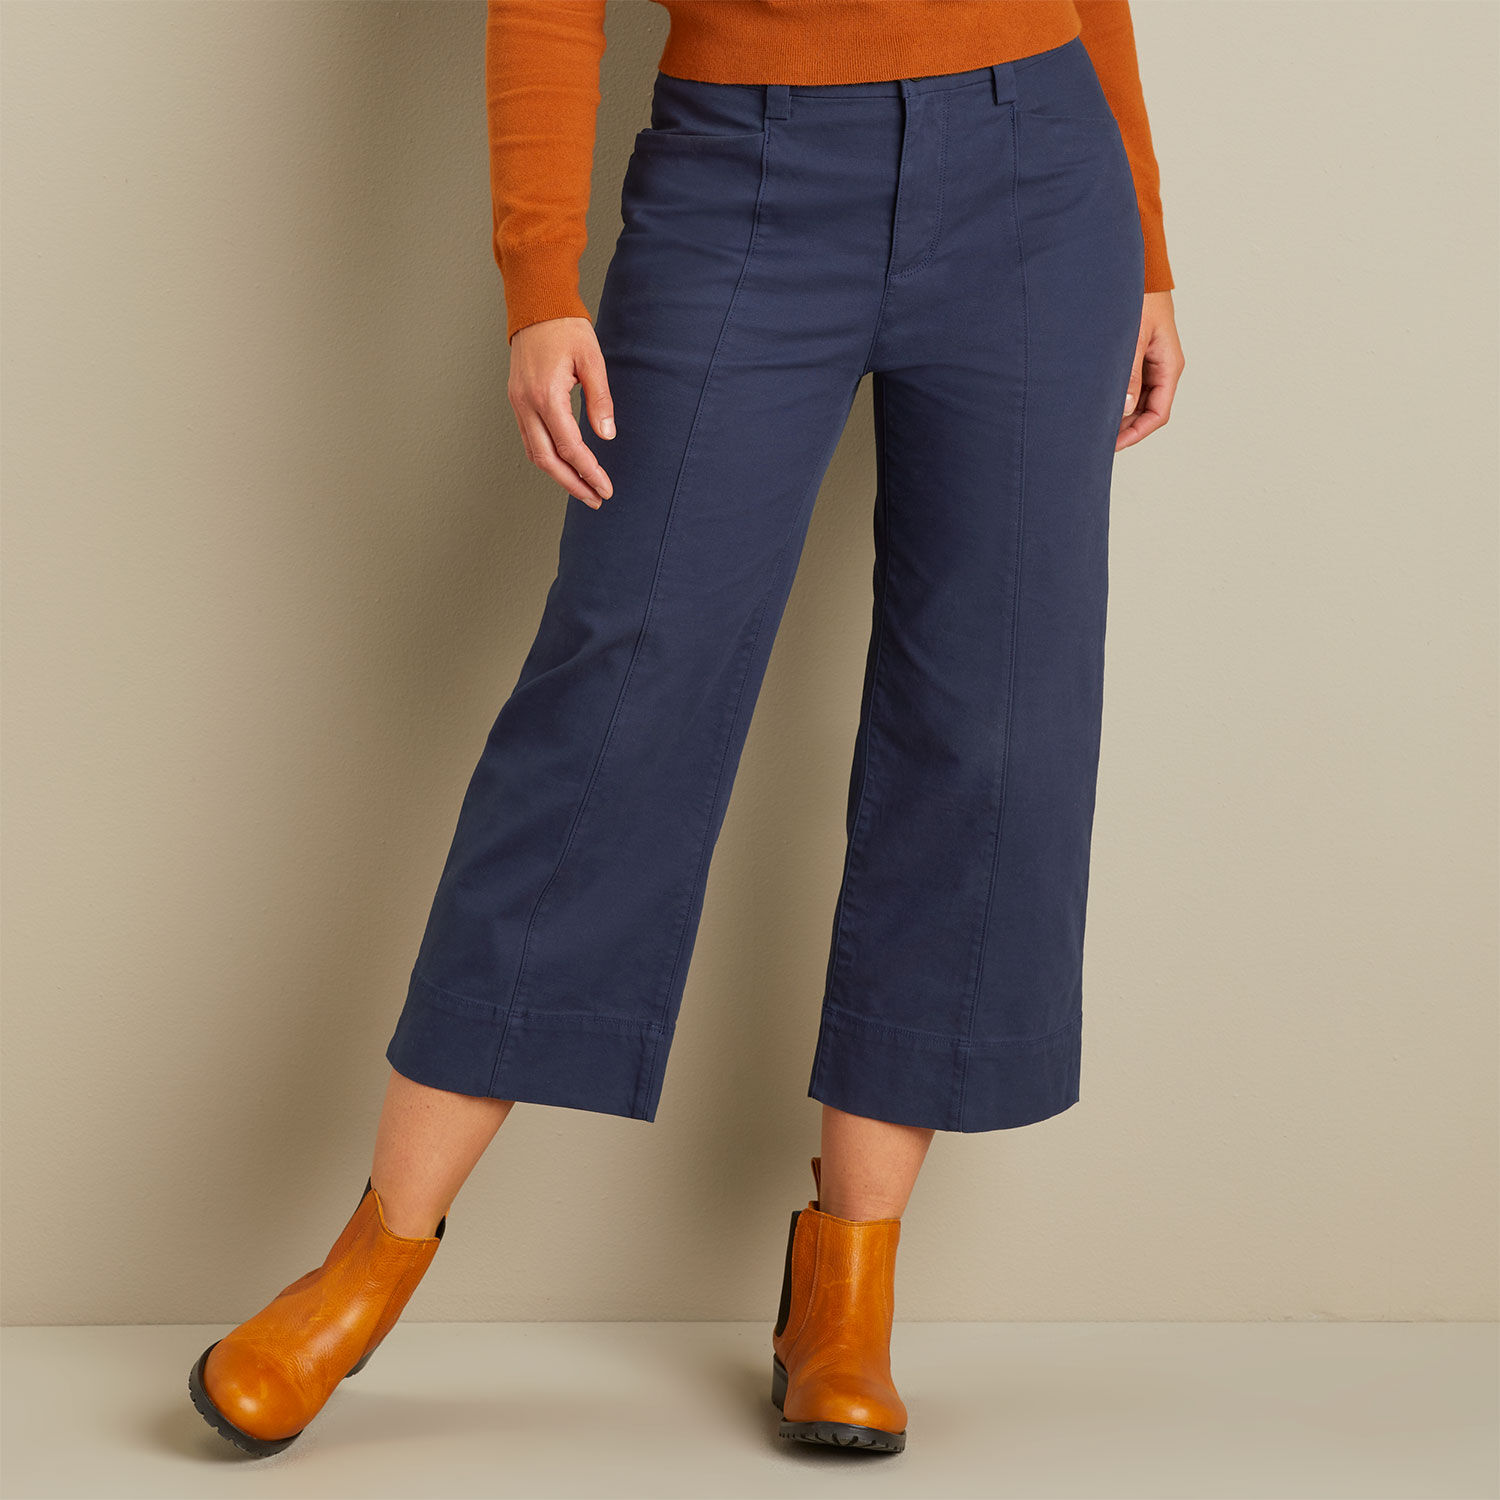 NWT Anthropologie Maeve Remi Wide-Leg Crop Chino Pants, Size 12 | eBay